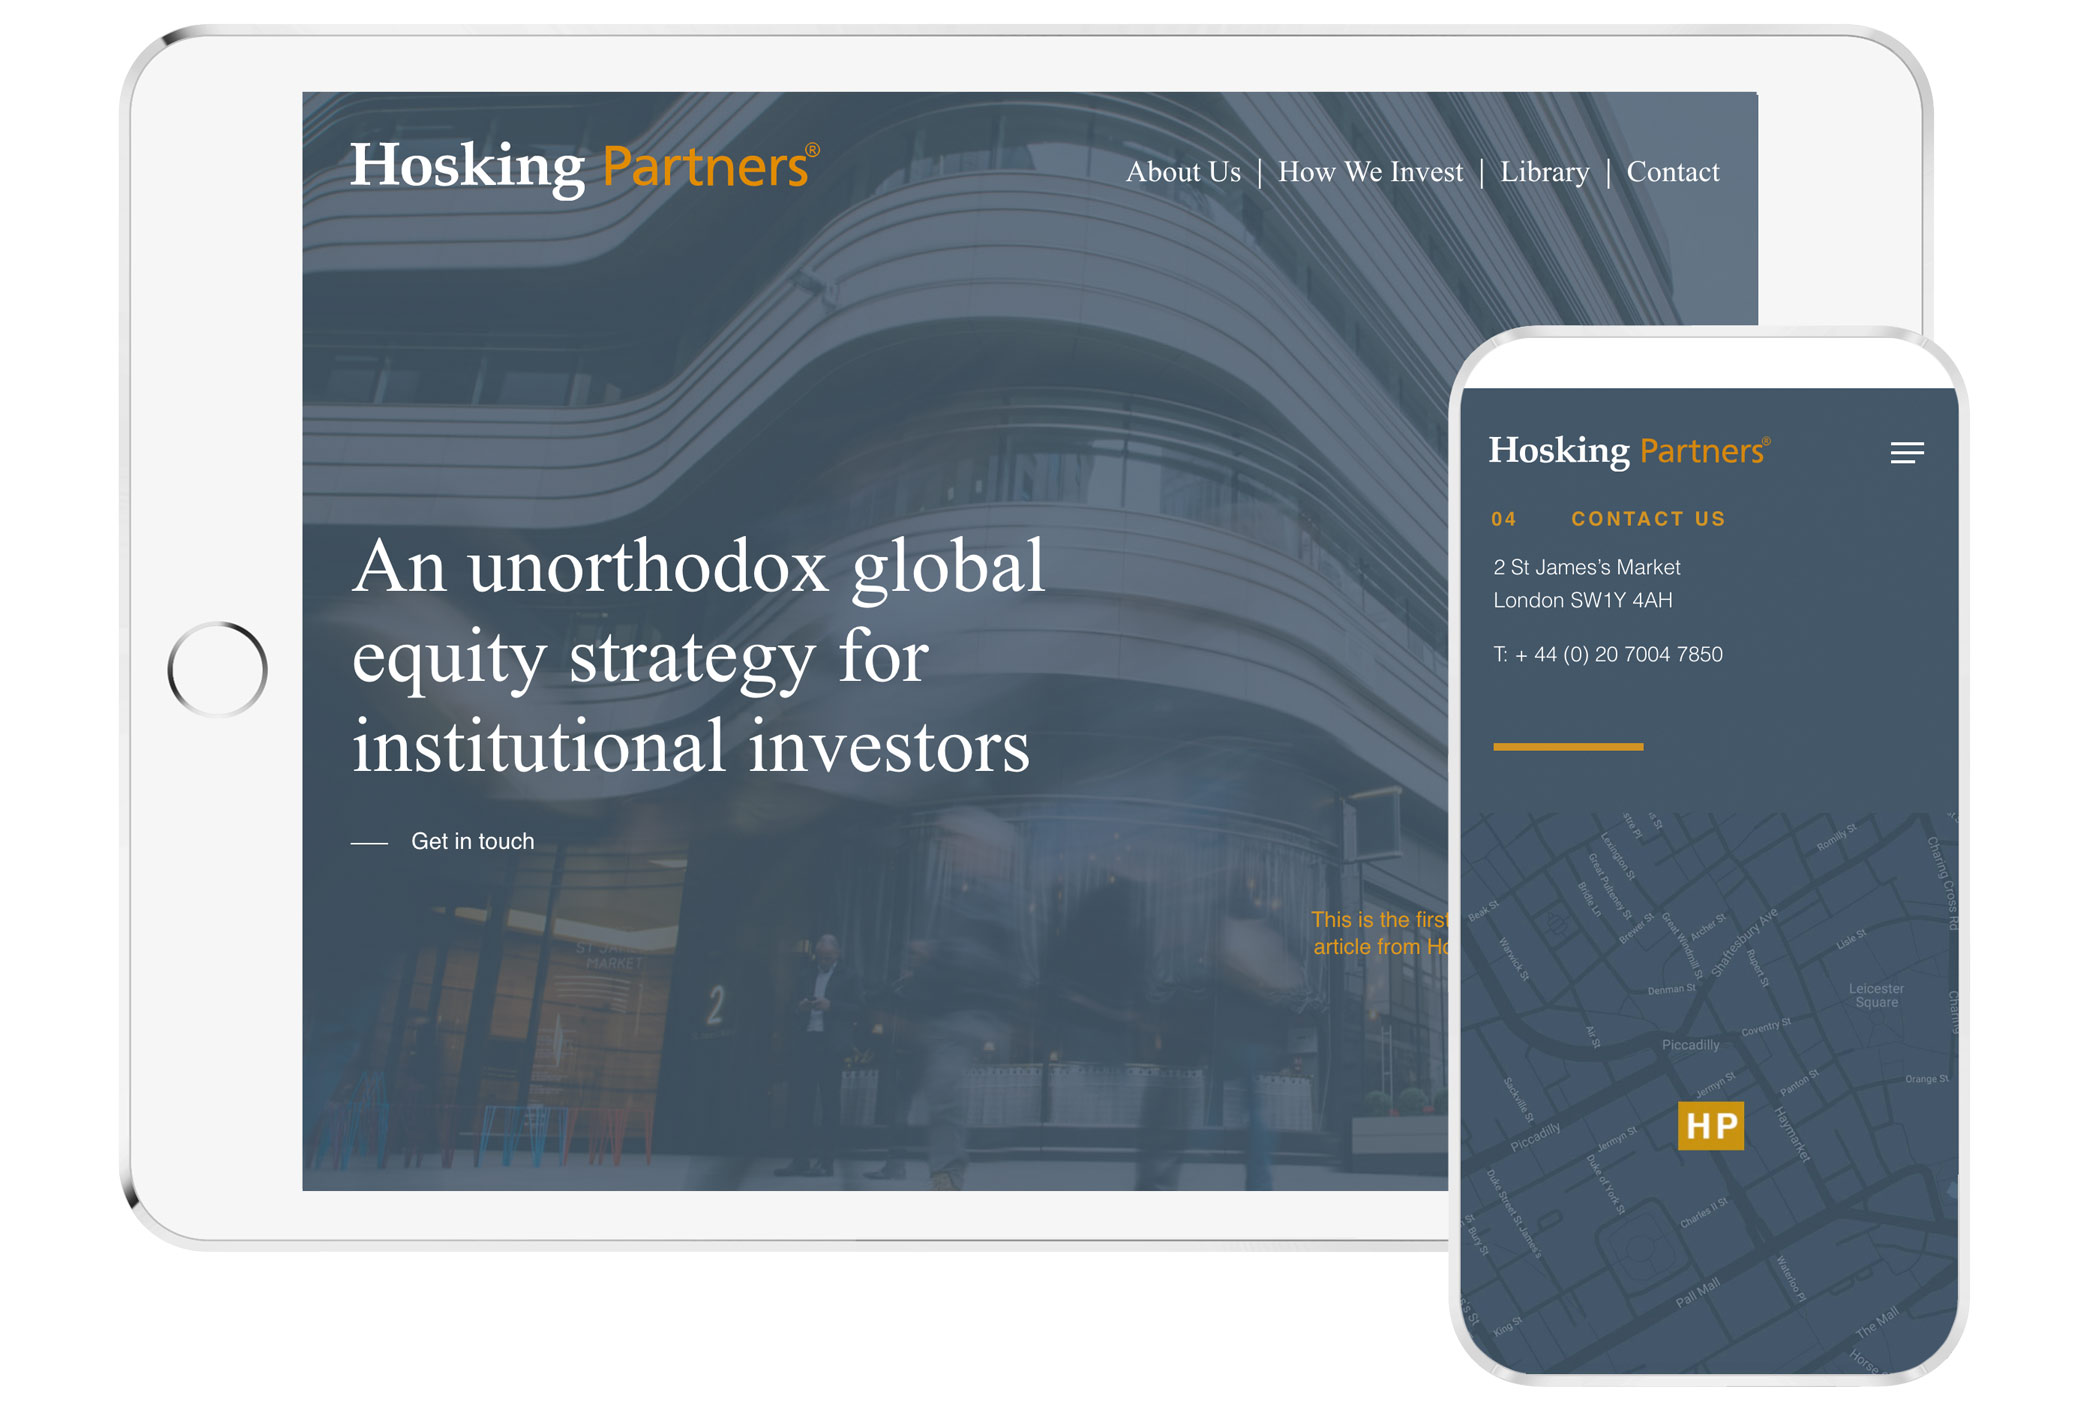 Hosking Partners Website Design For Financial Services